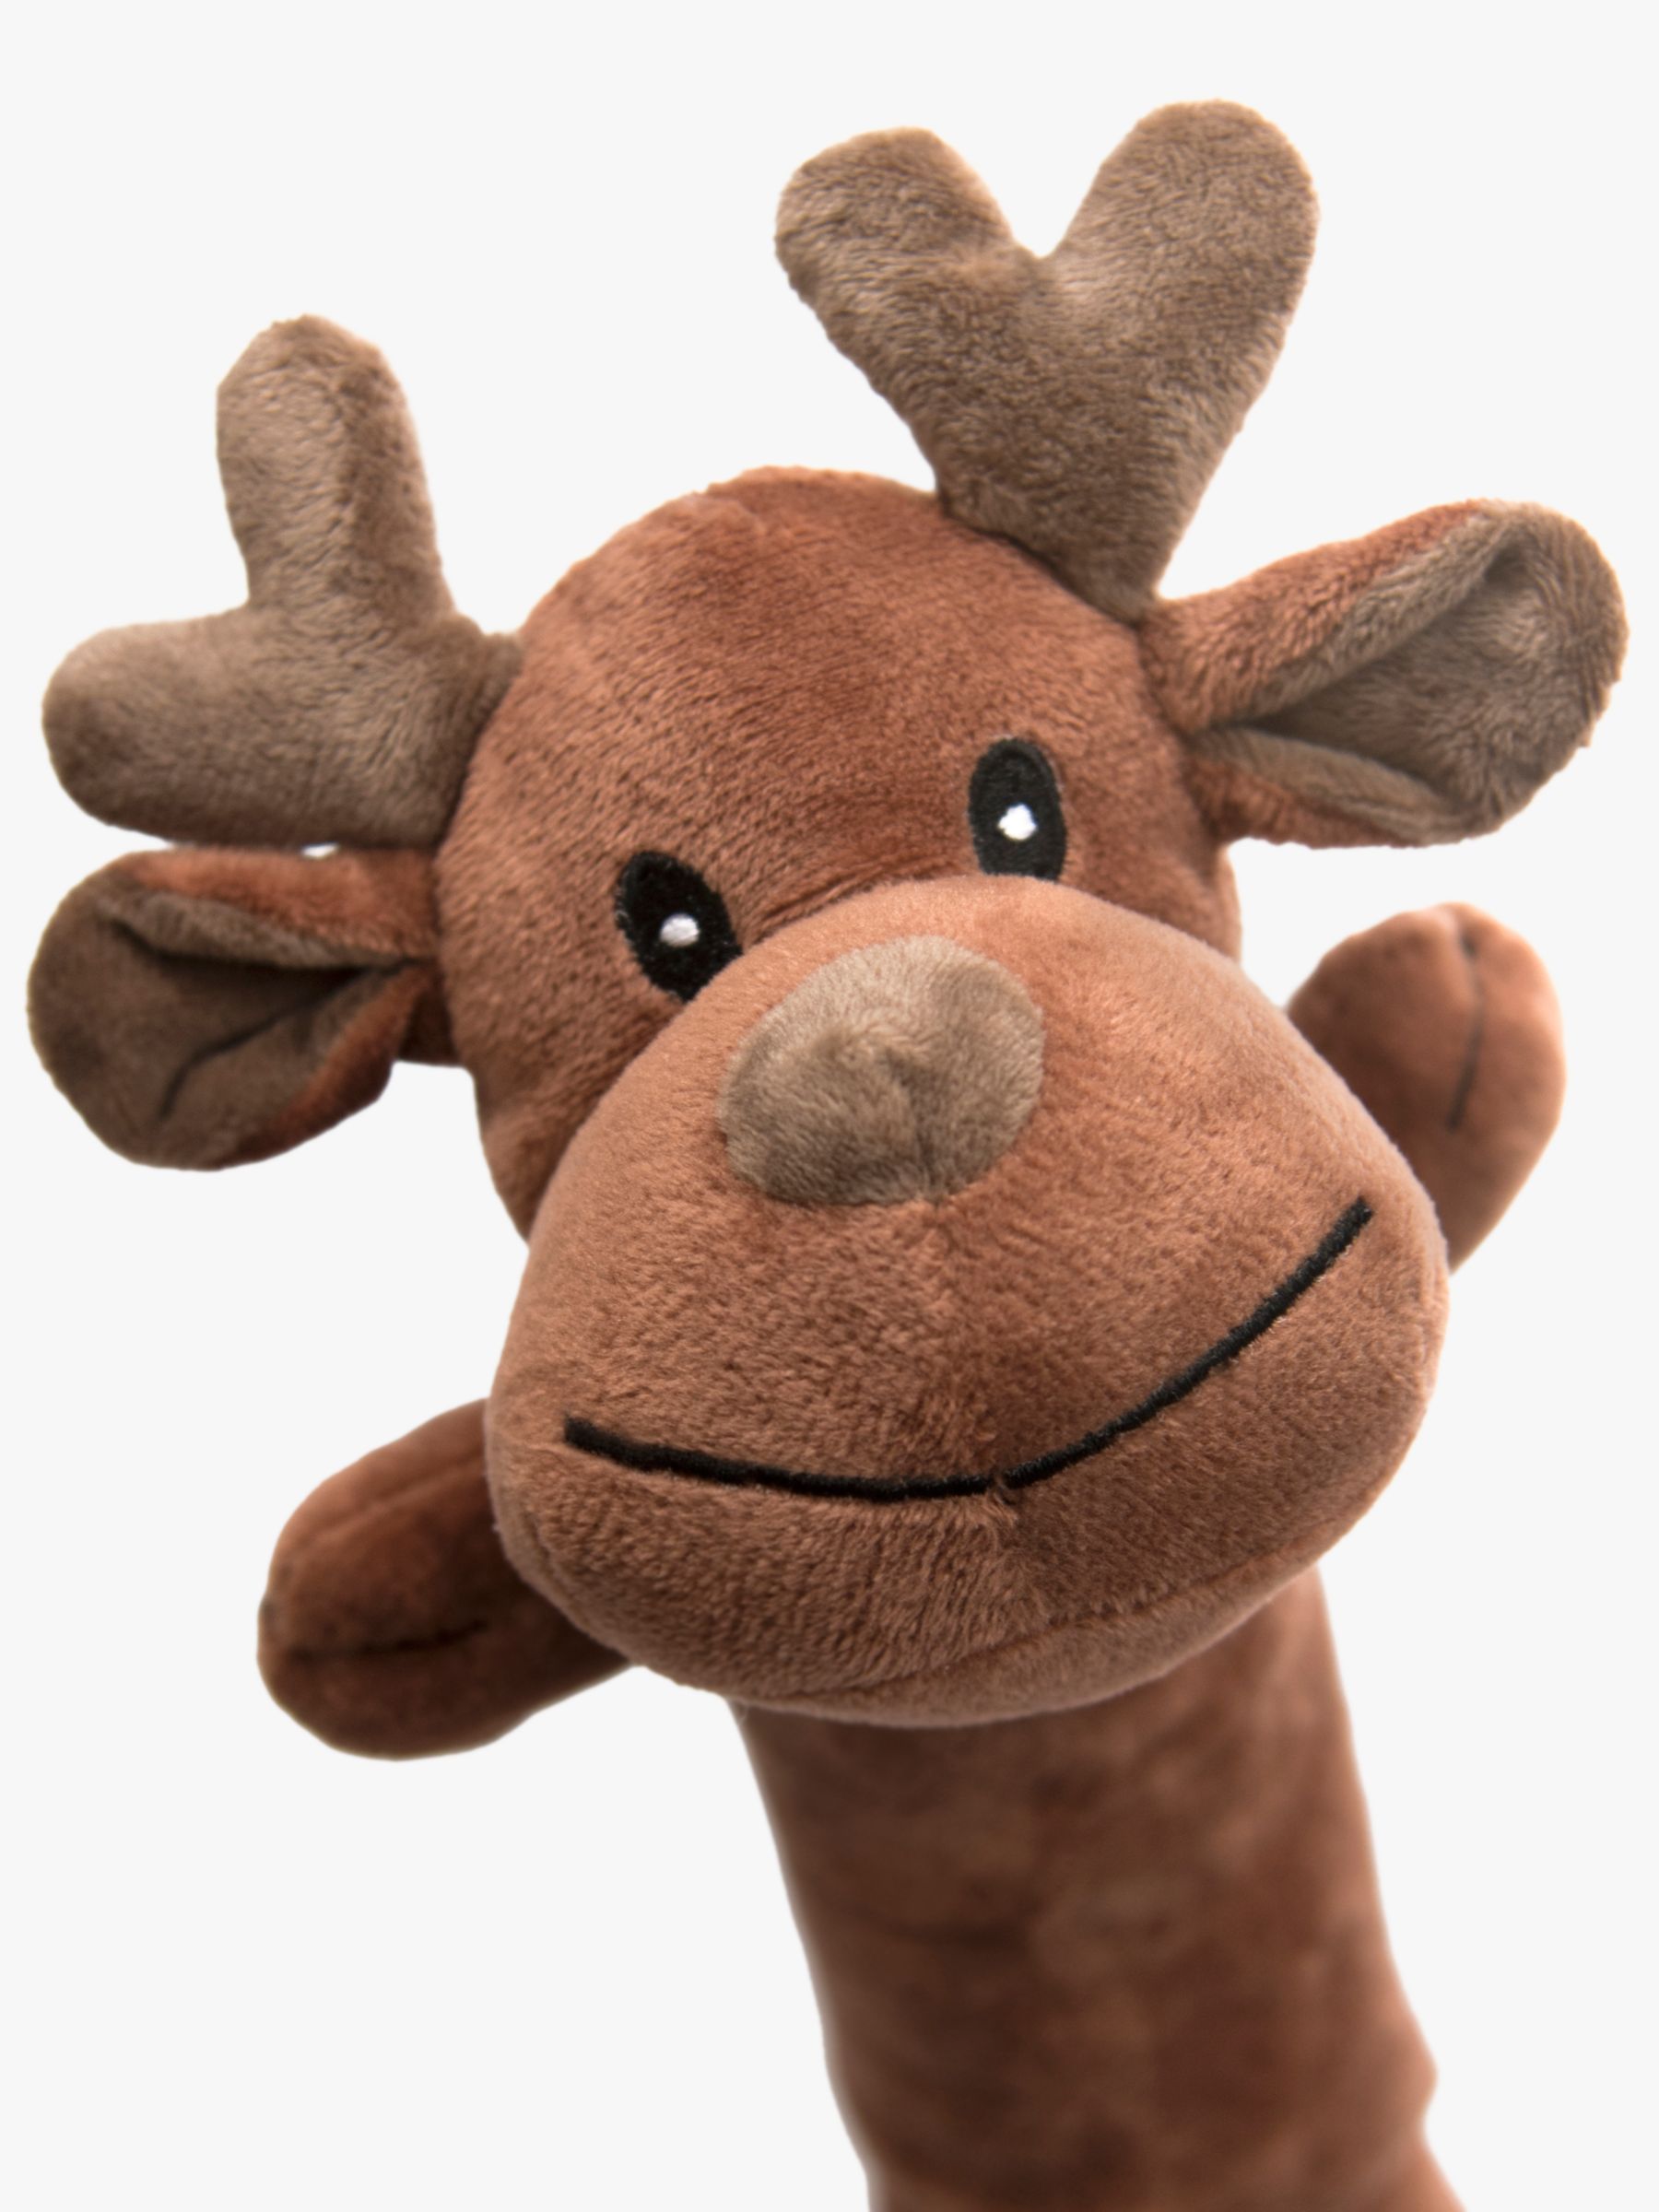 fred the reindeer stuffed animal